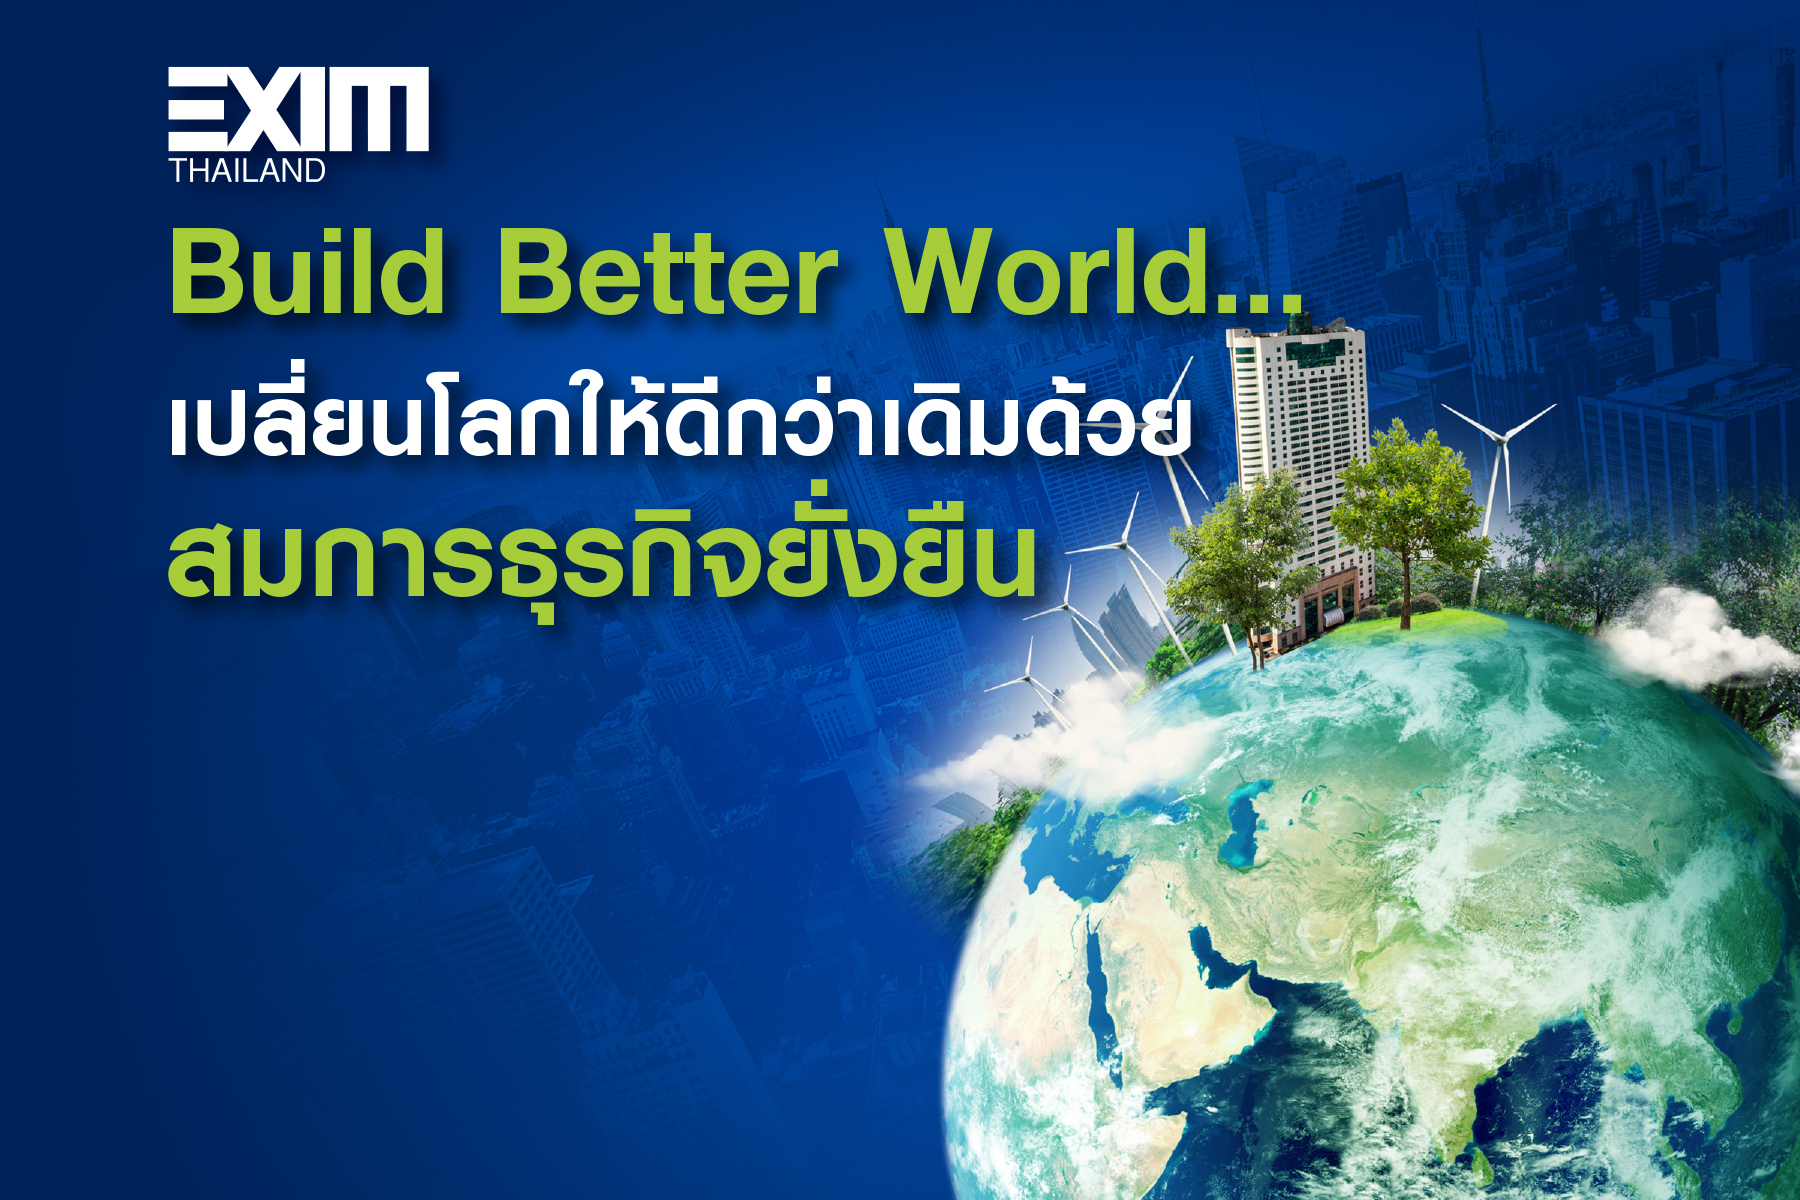 Build Better World...เปลี่ยนโลกให้ดีกว่าเดิมด้วยสมการธุรกิจยั่งยืน